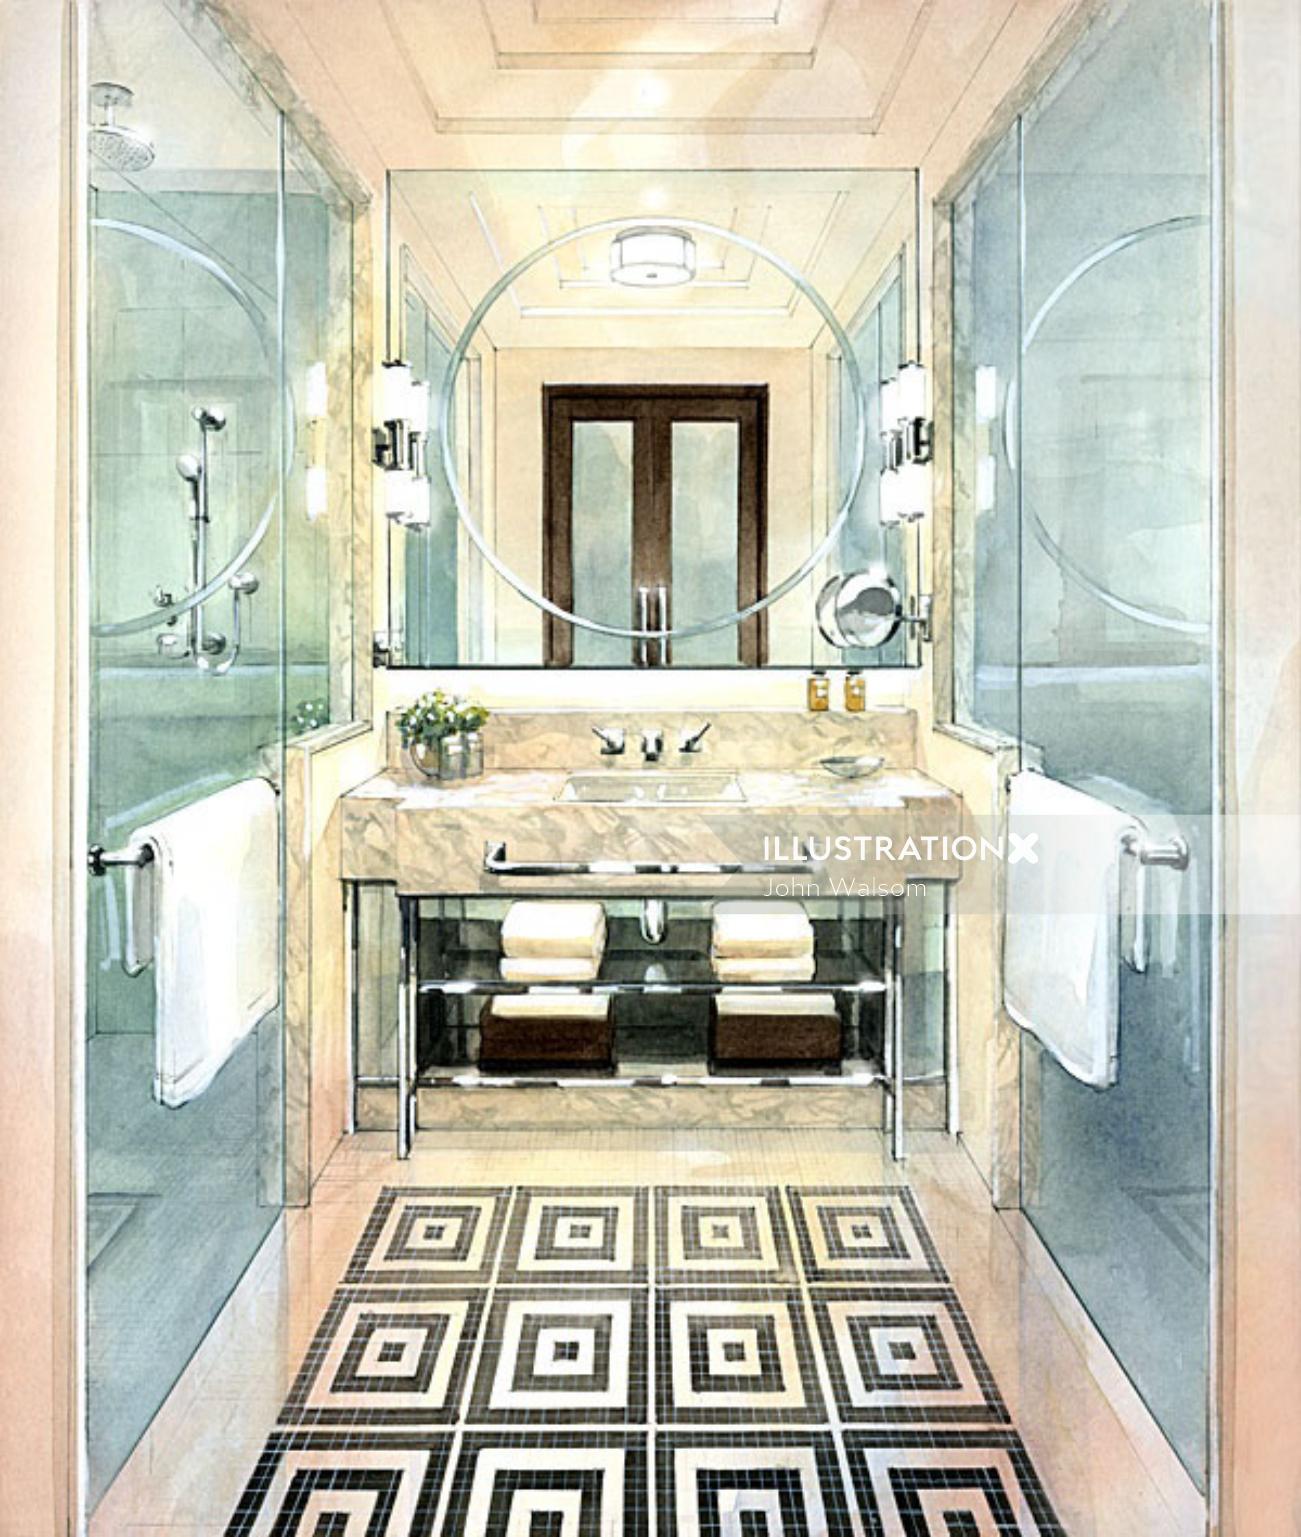 Decoration of contemporary bathrooms